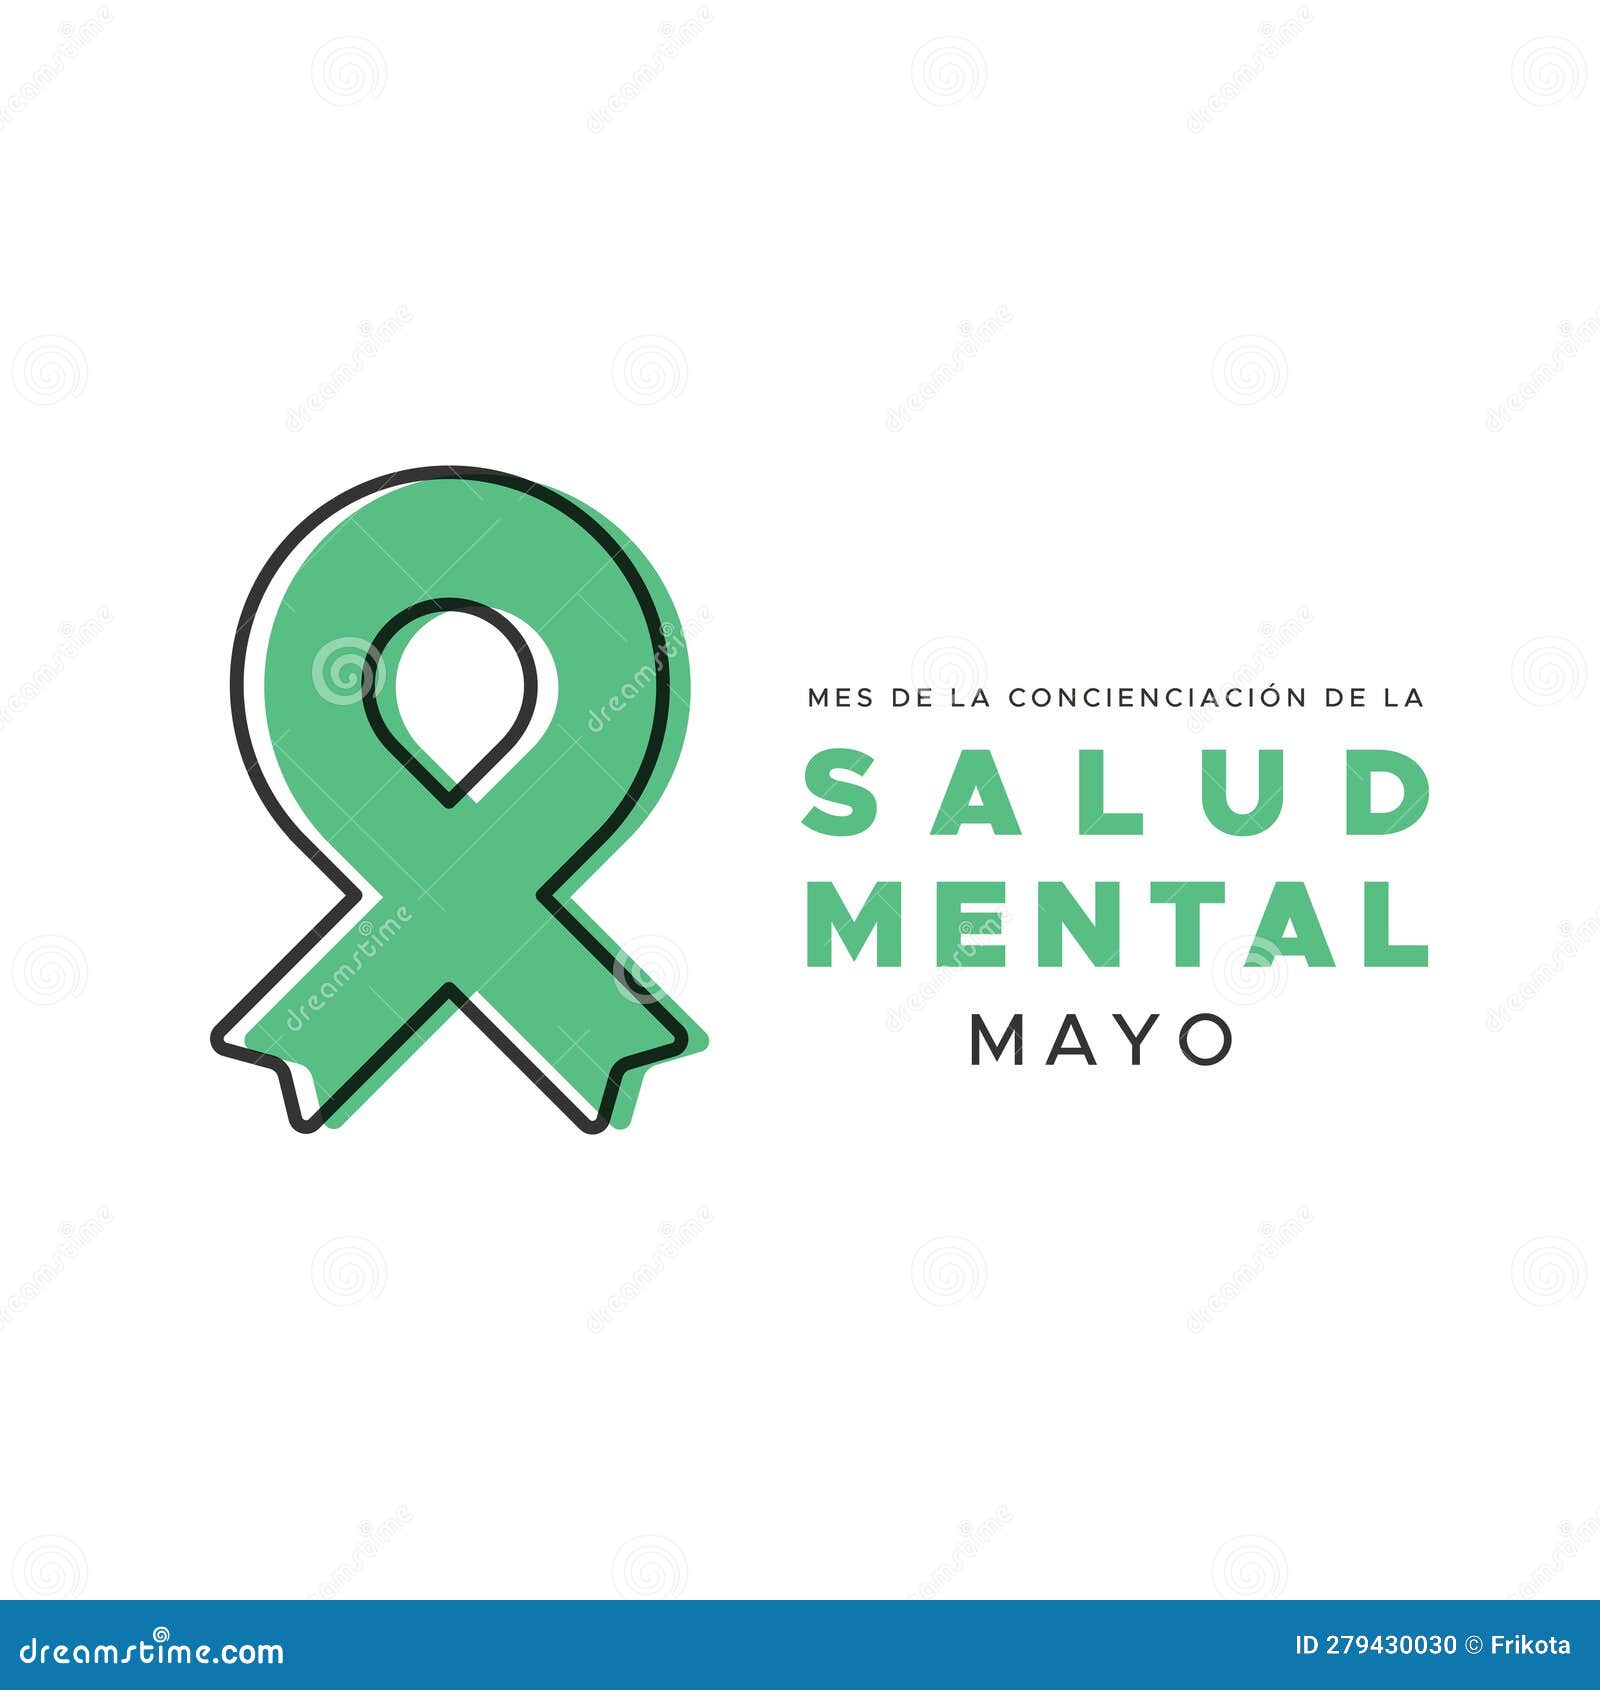 may is mental health awareness month in spanish. mes de la concienciacion de la salud mental. green awareness ribbon. 